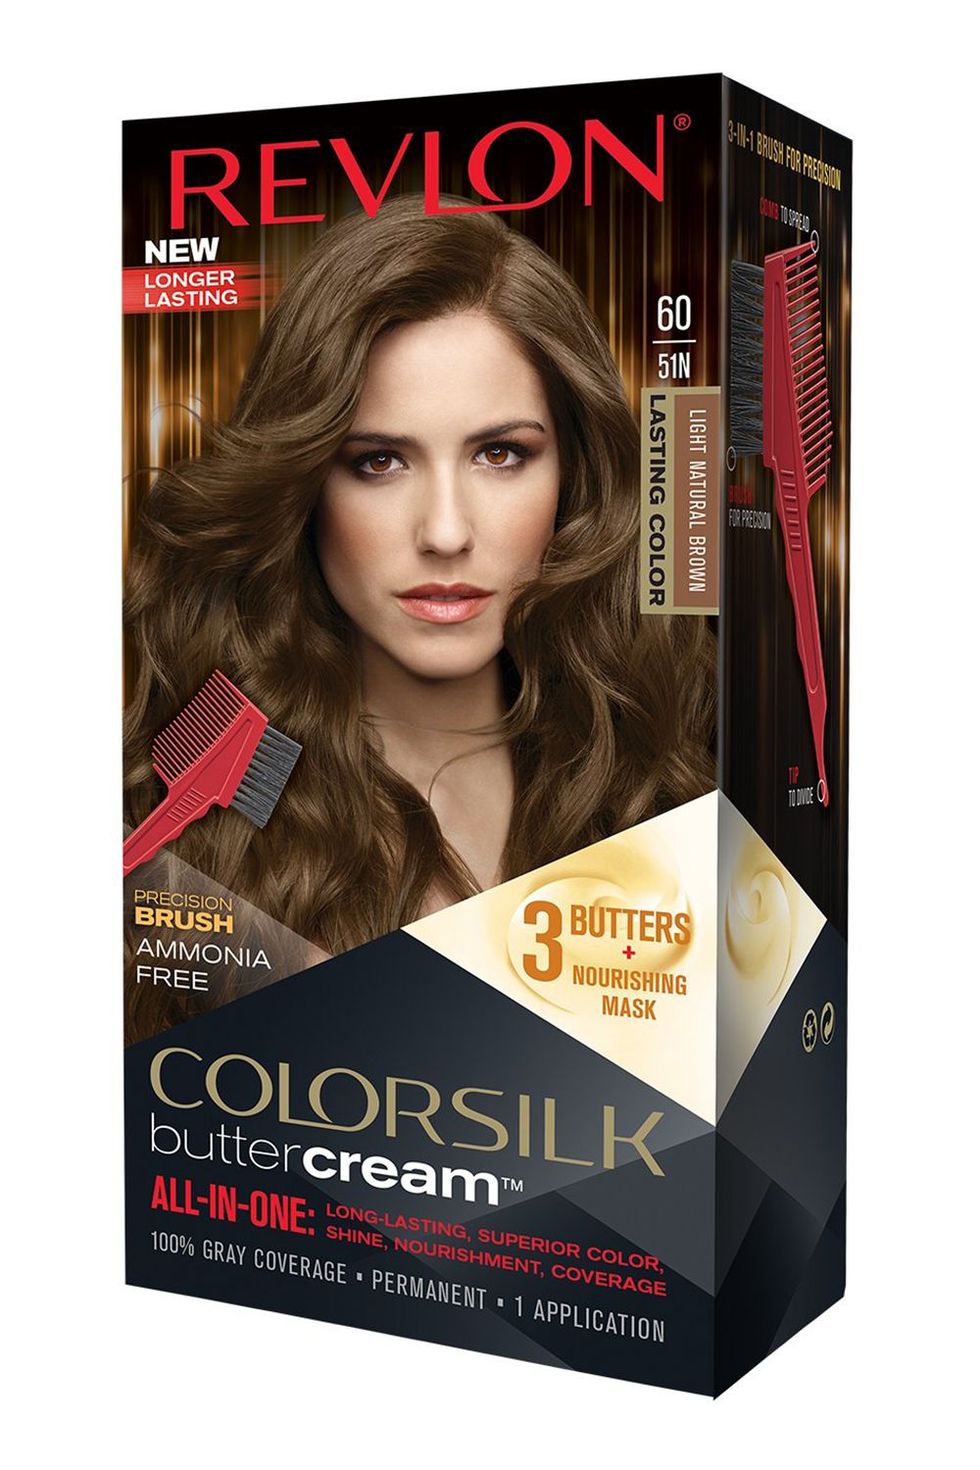 Revlon Colorsilk Buttercream Hair Dye